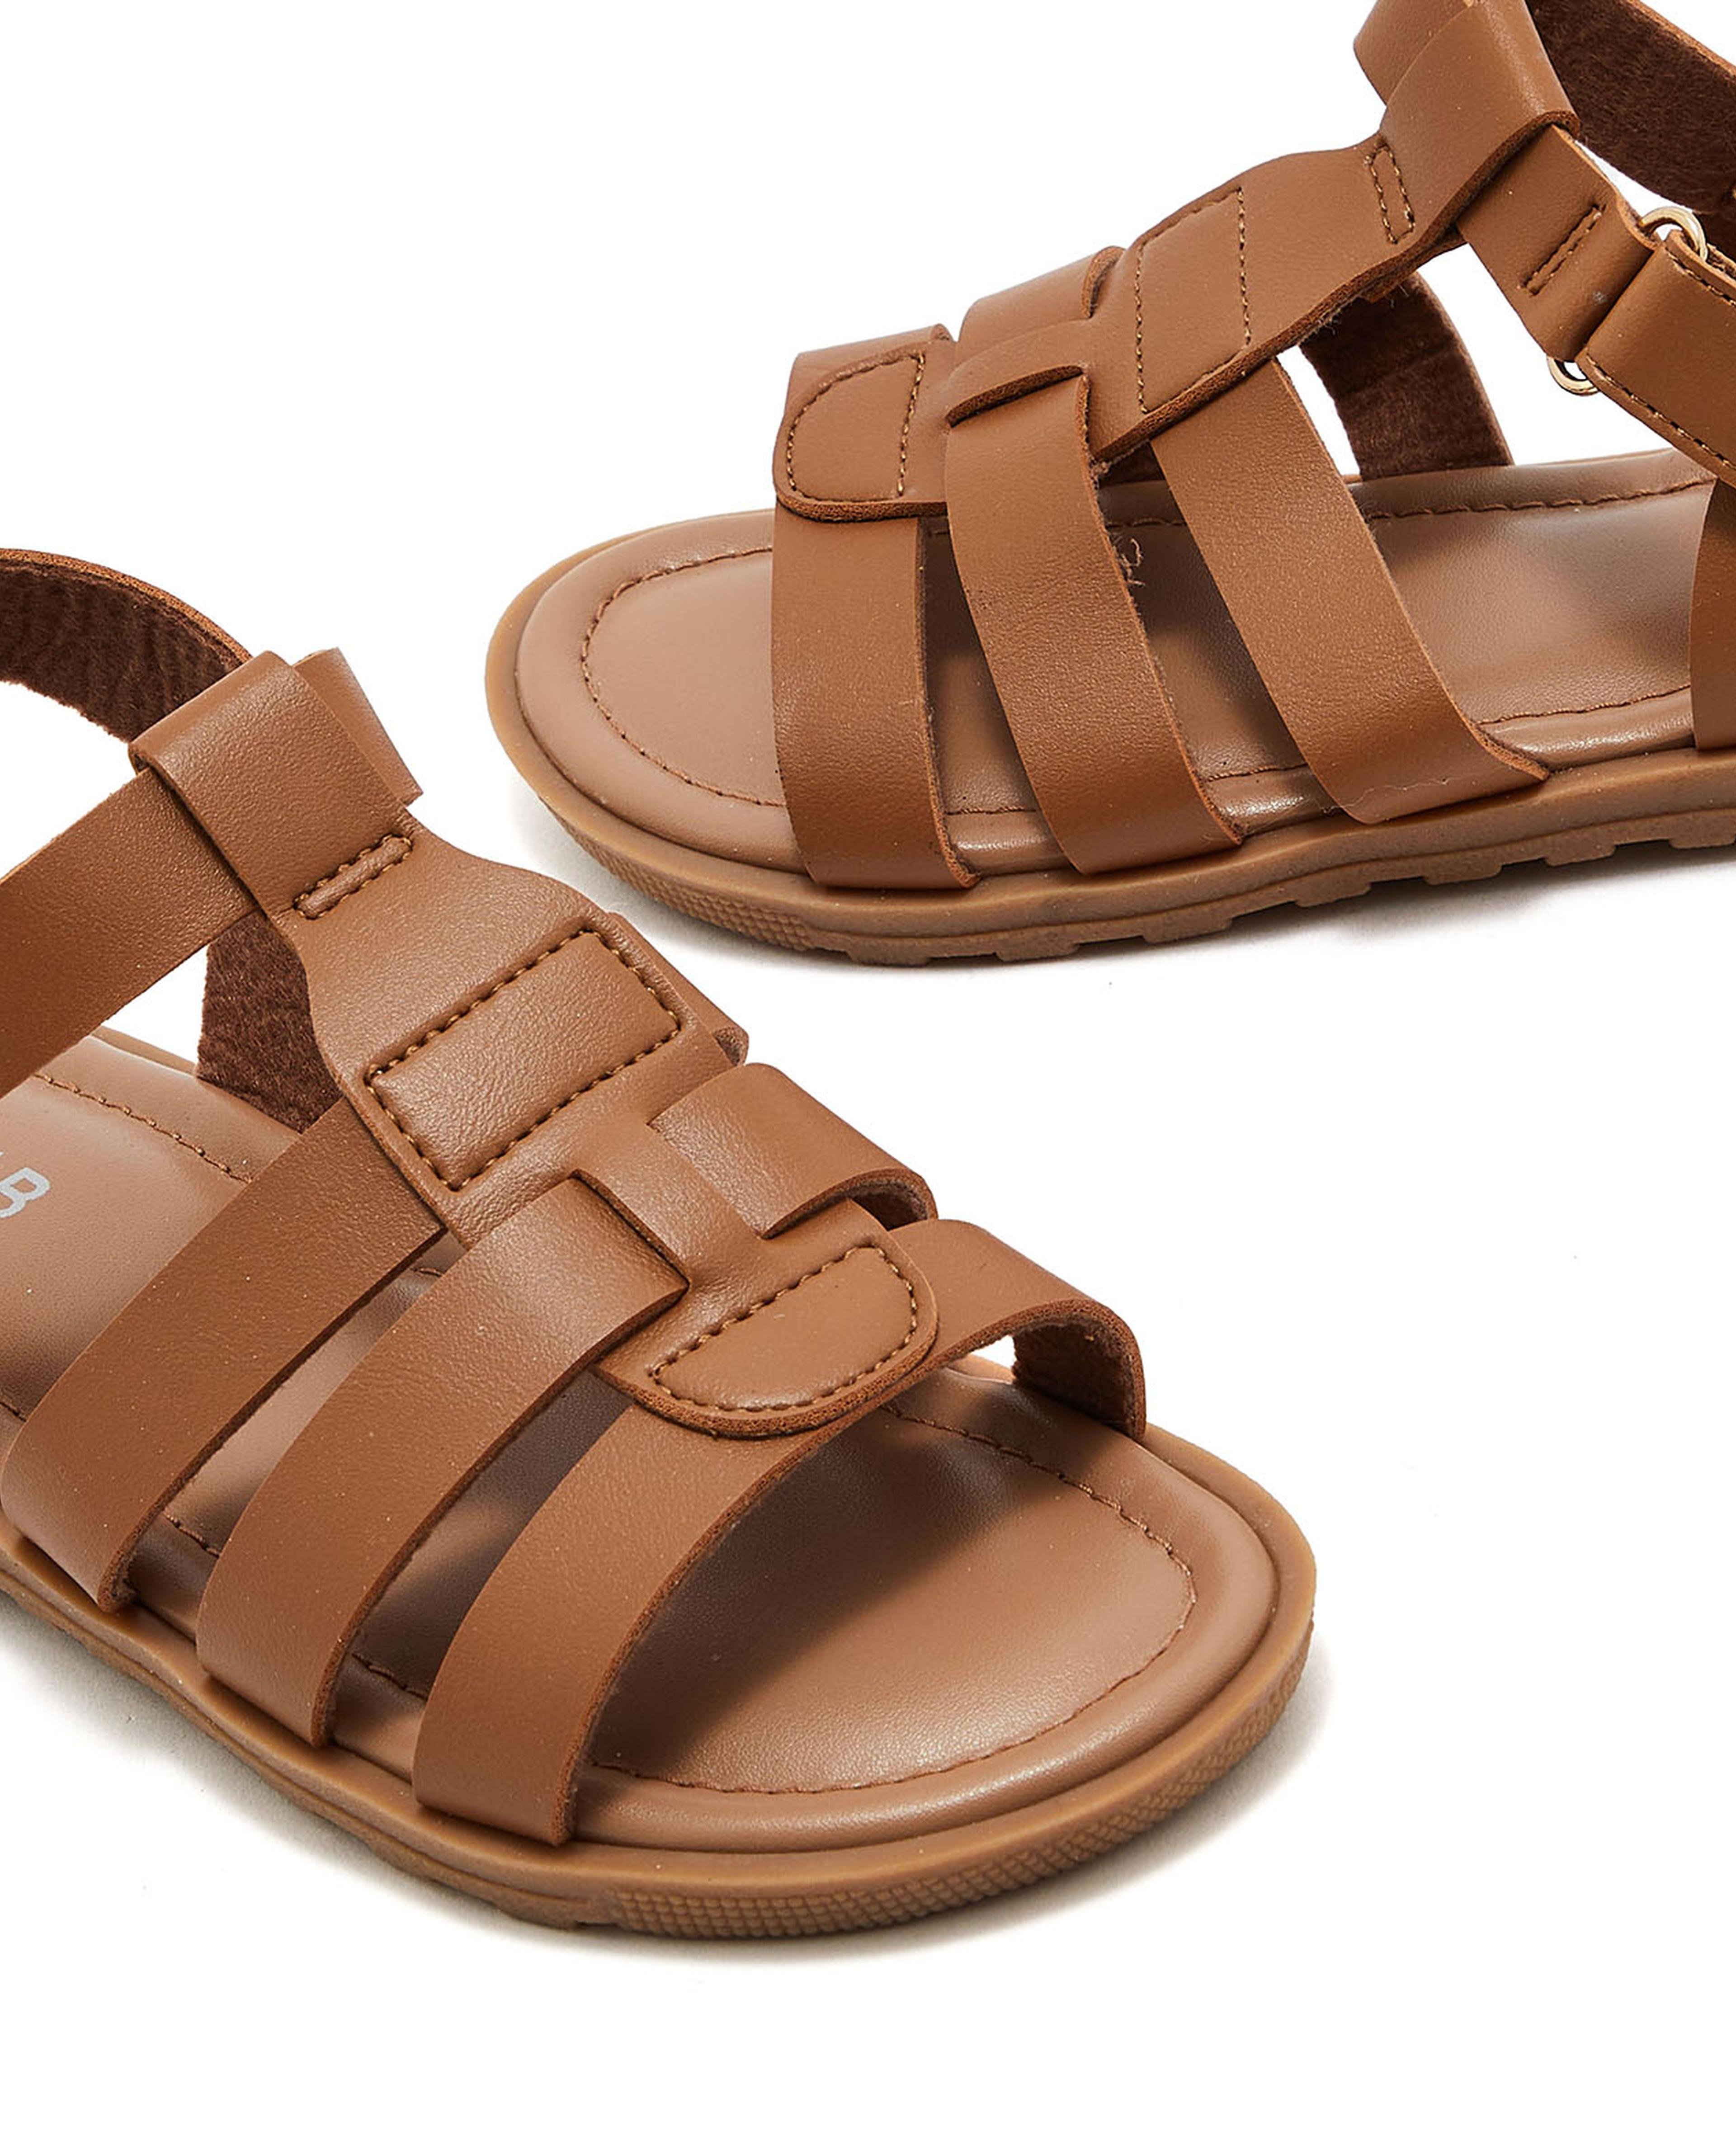 Solid Comfort Sandals